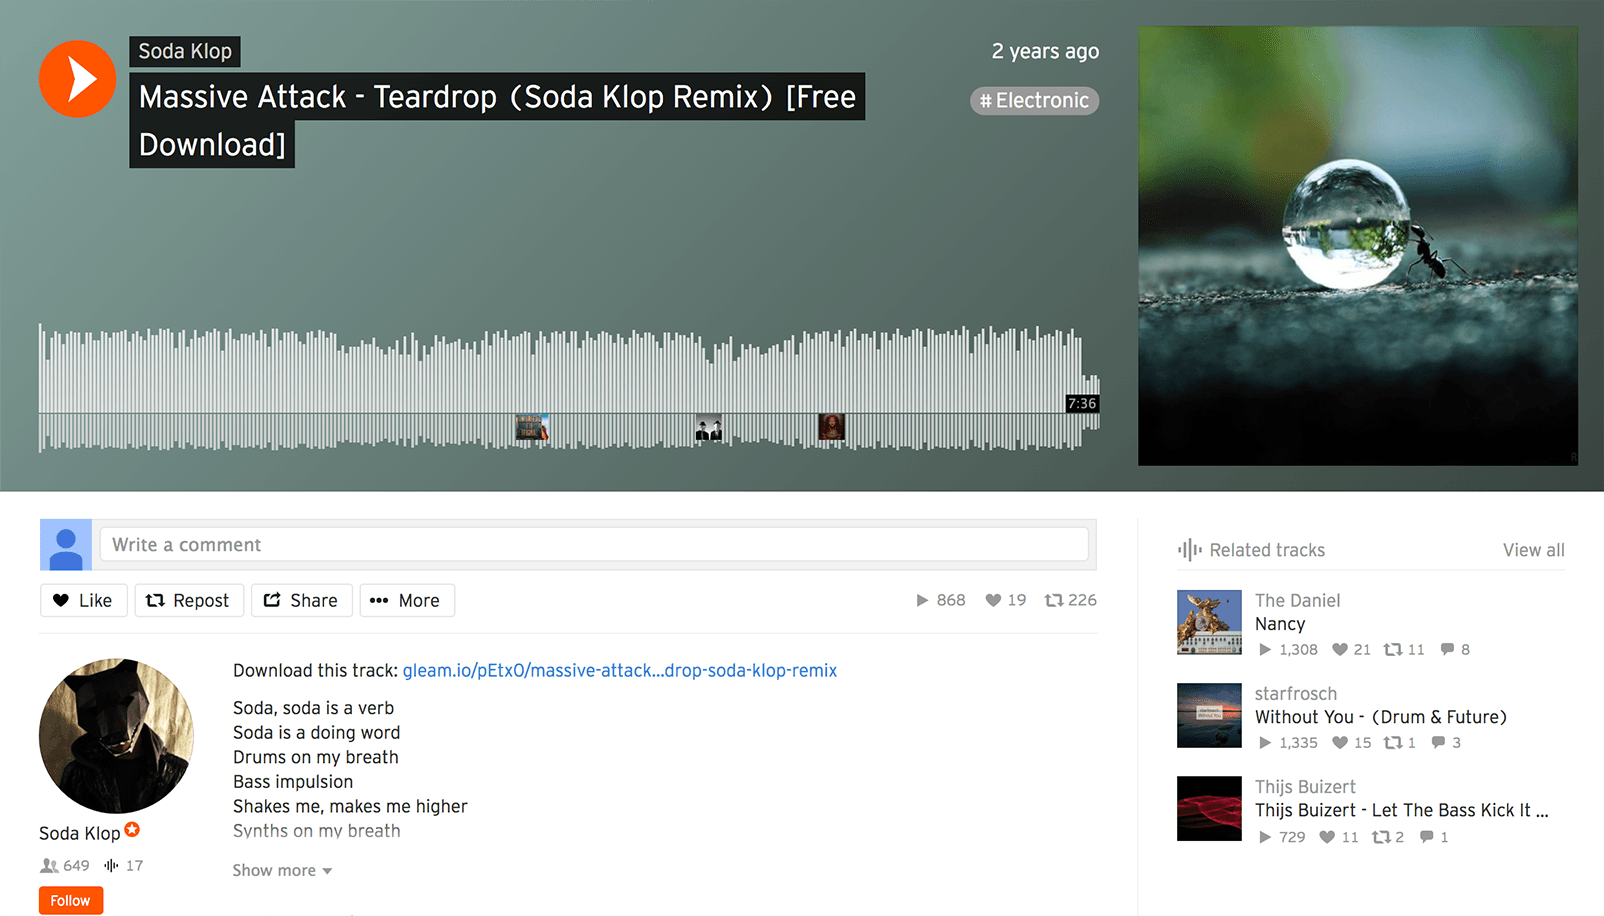 Soda Klop's track uploaded to SoundCloud